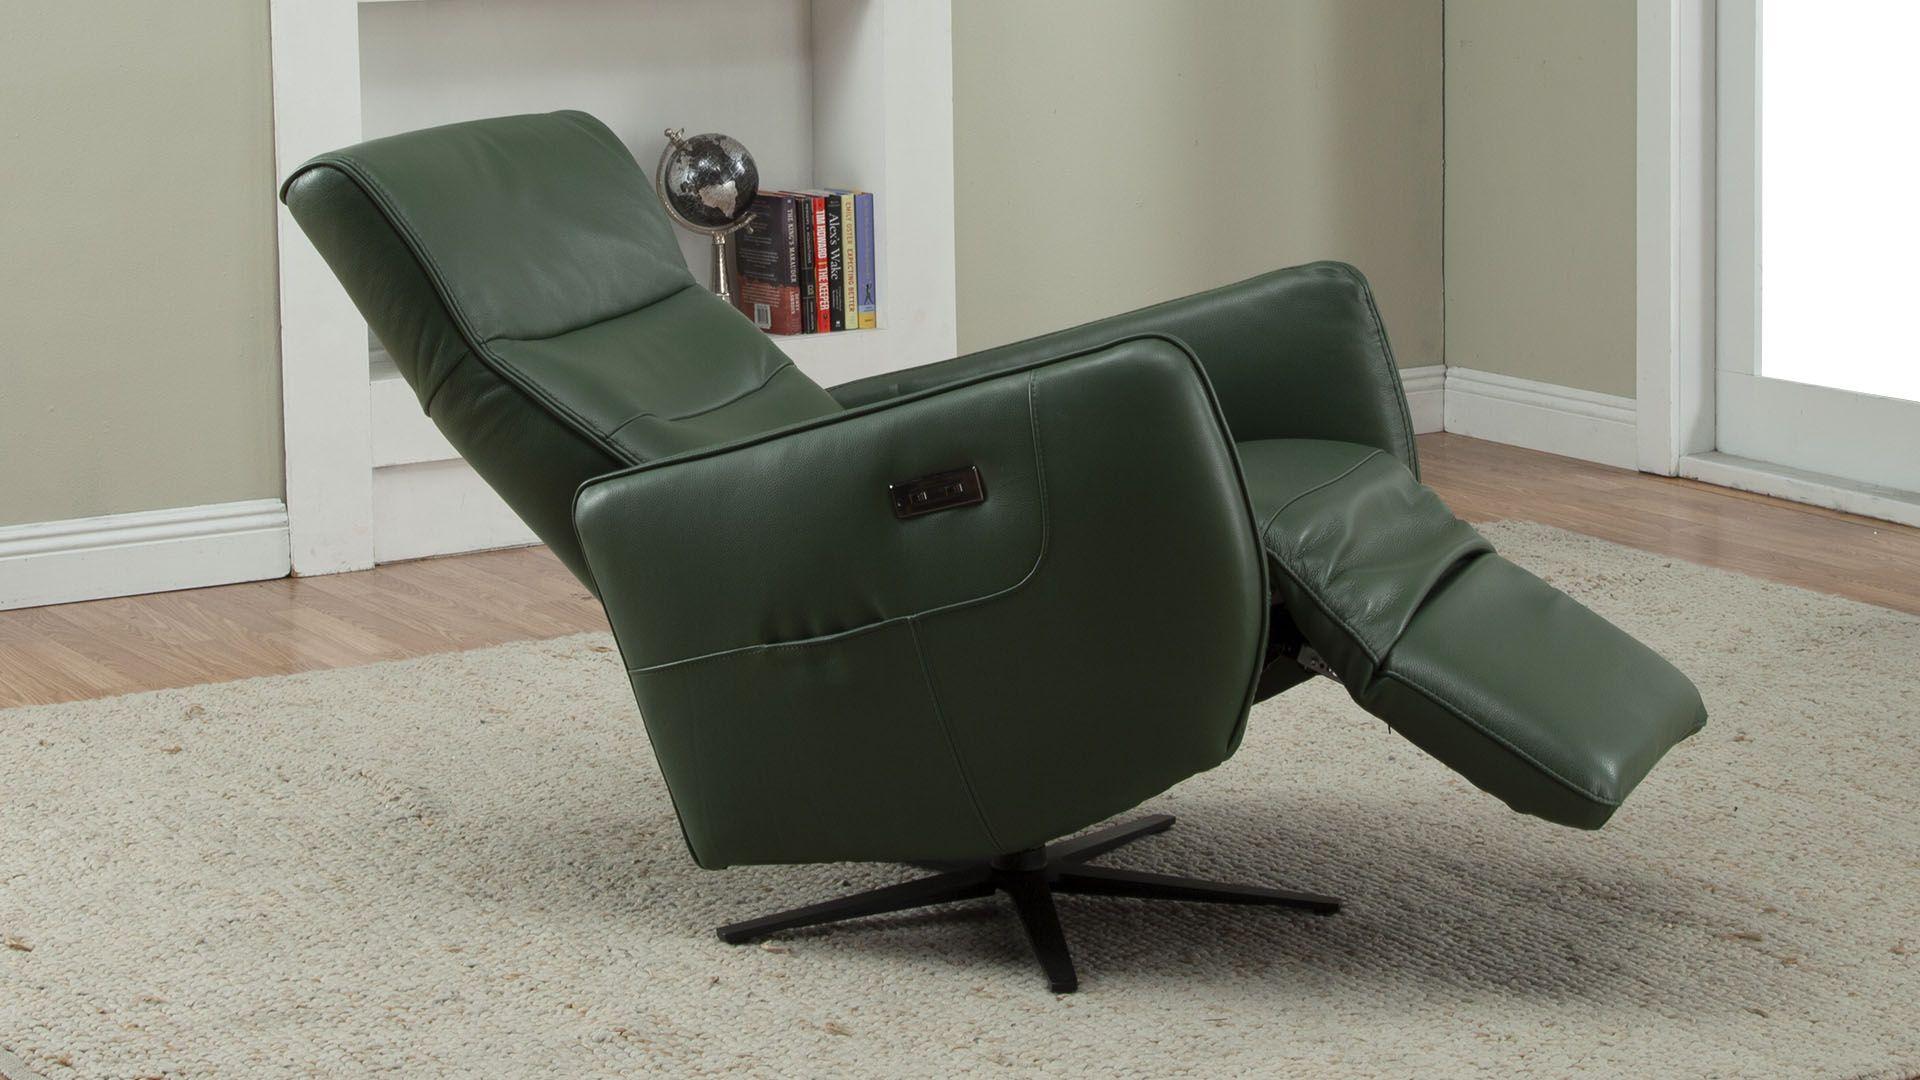 

                    
American Eagle Furniture EK-CH036-GN Reclining Chair Green Top grain leather Purchase 
